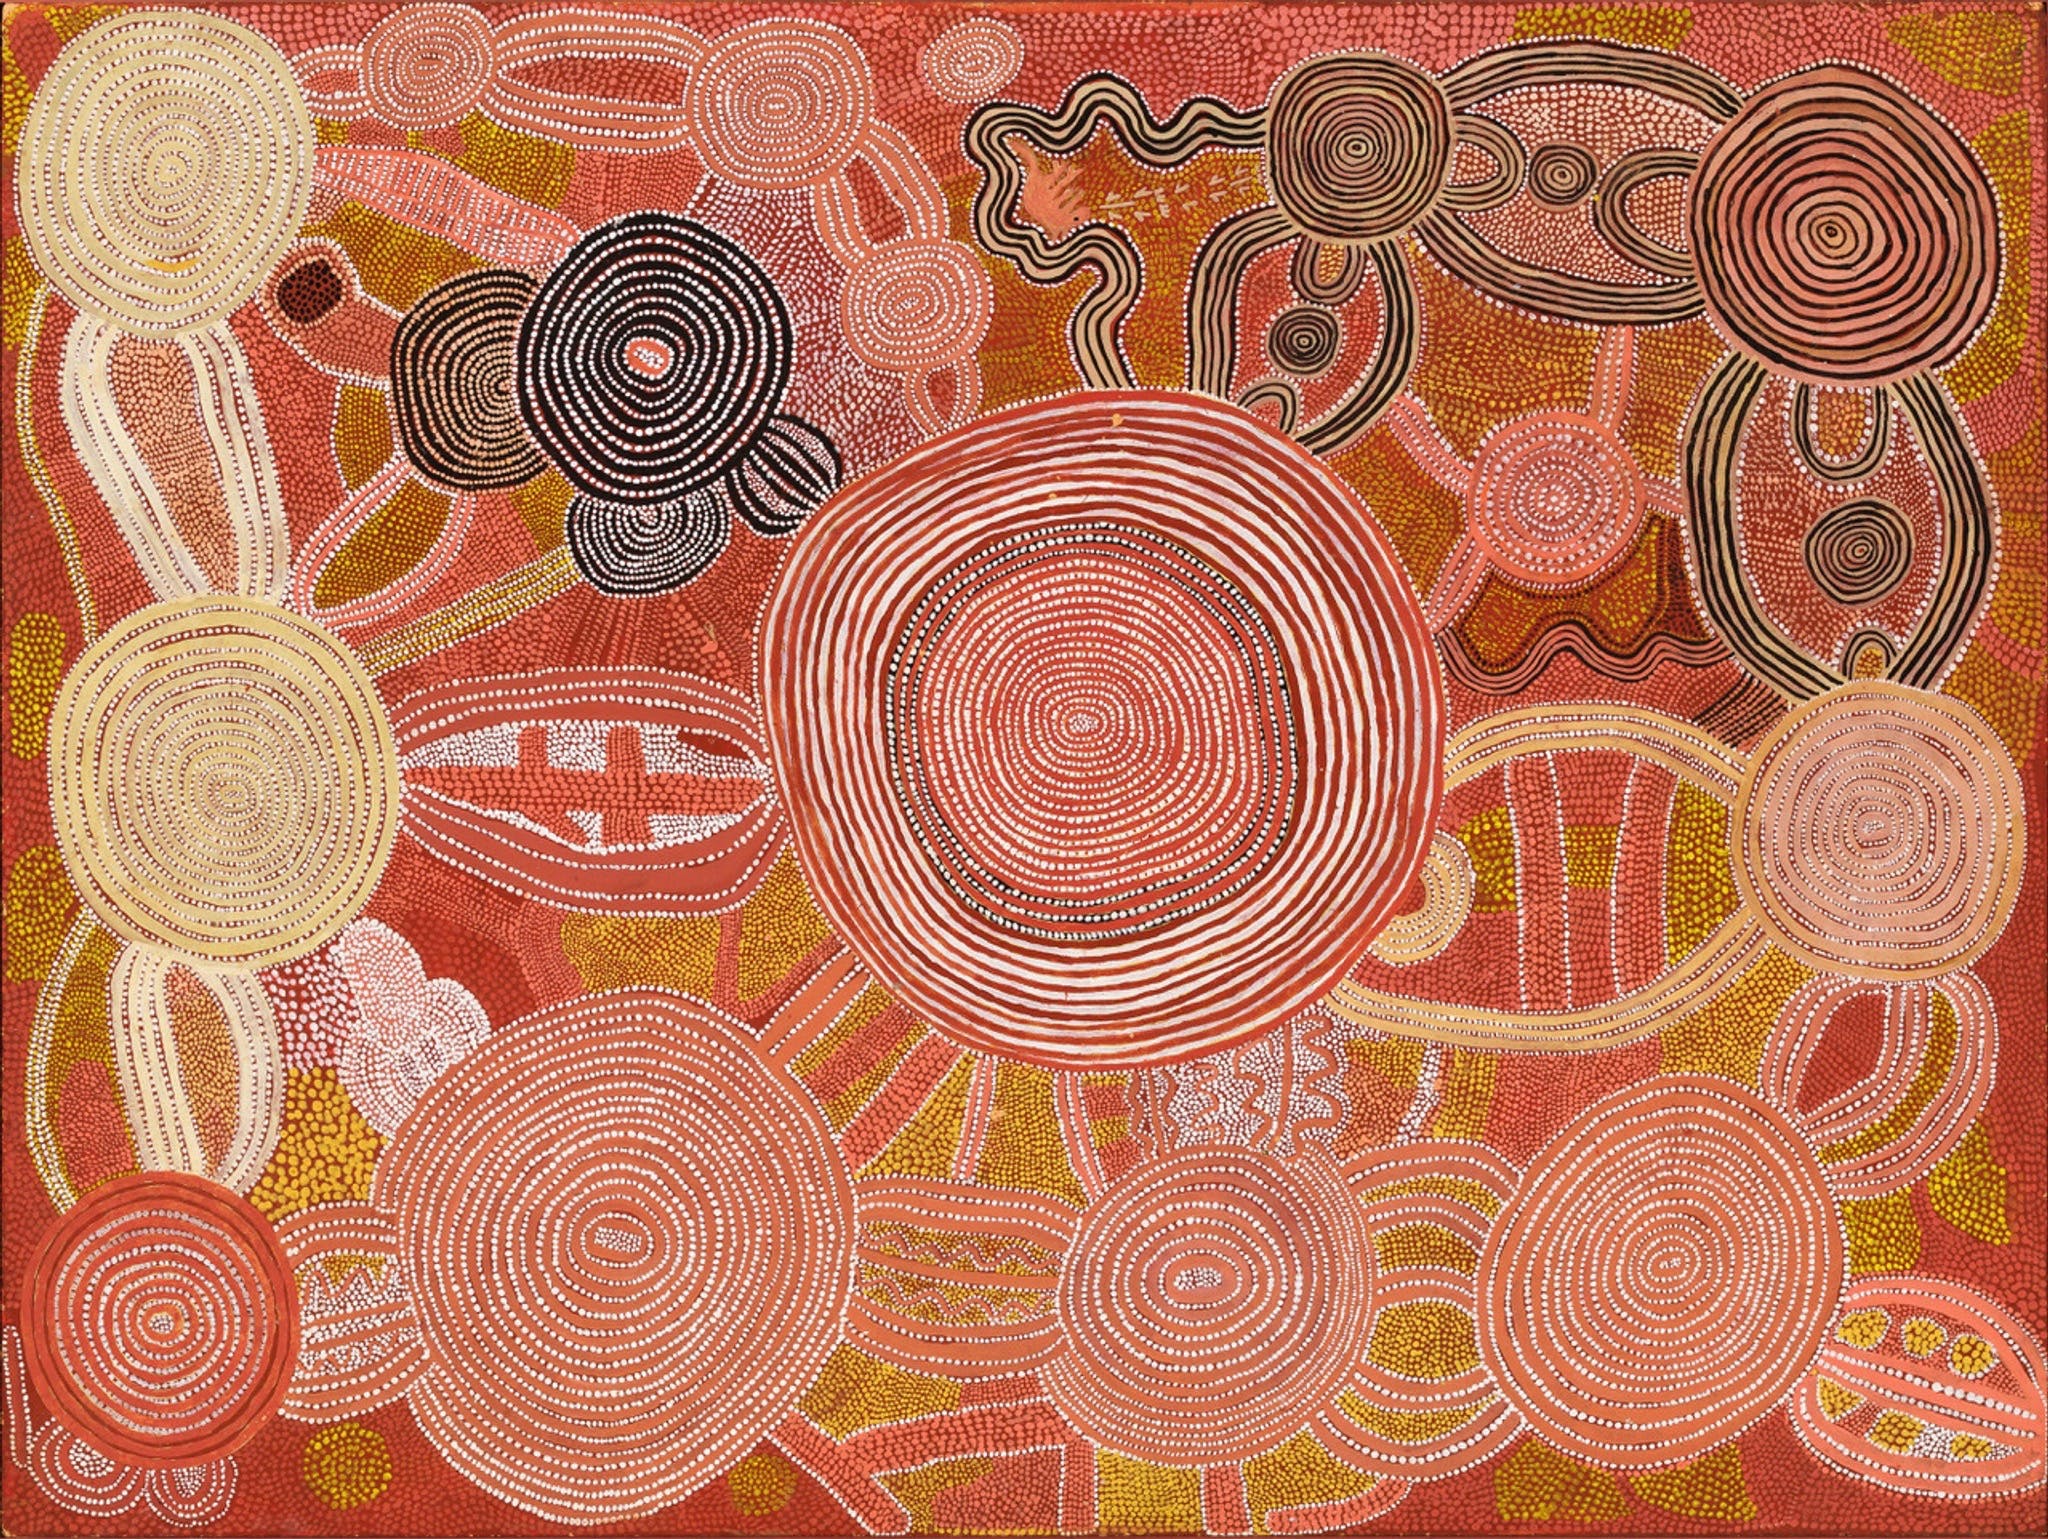 Reverence Exhibition of Australian Indigenous Art - Geraldton Accommodation